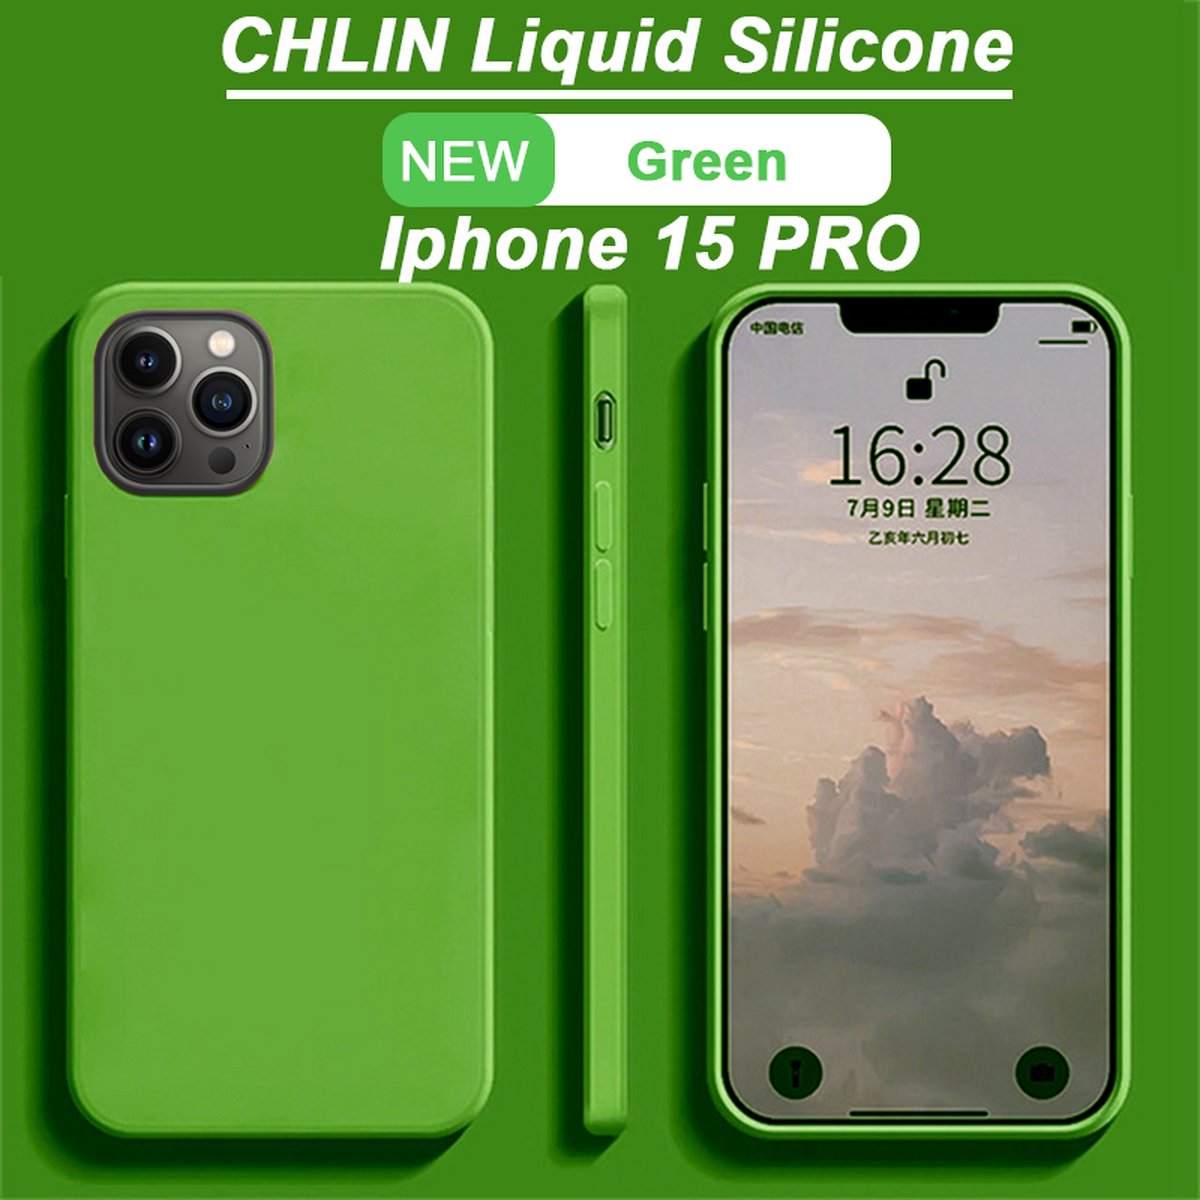 CL CHLIN® Premium Siliconen Case iPhone 15 Pro Groen - iPhone 15 Pro hoesje - iPhone 15 Pro case - iPhone 15 Pro hoes - Silicone hoesje - iPhone 15 Pro protection - iPhone 15 Pro protector.